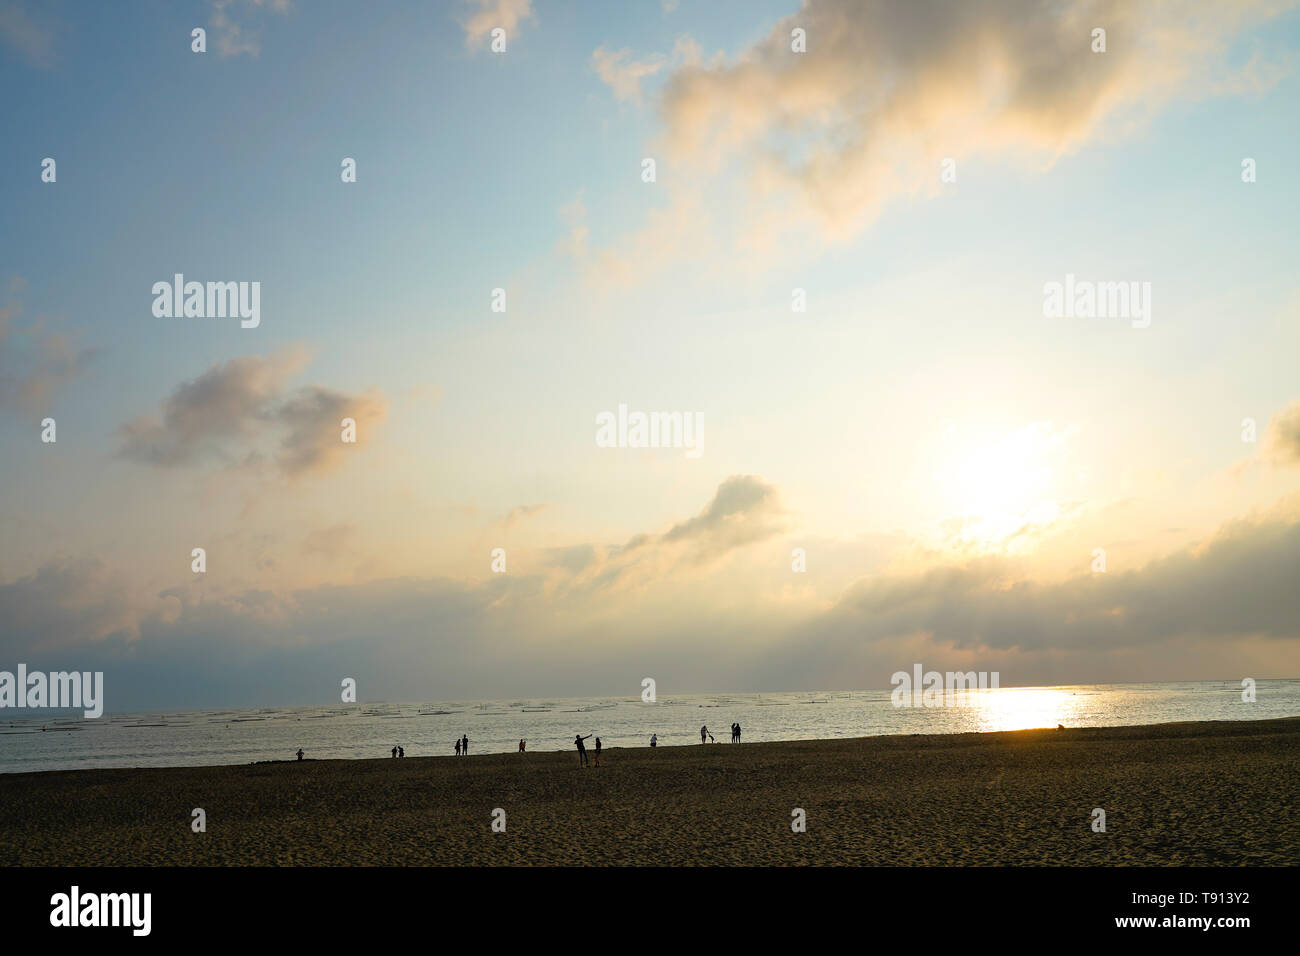 Sonnenuntergang Plattform, einer berühmten Sehenswürdigkeiten in Tainan, Taiwan. Stockfoto